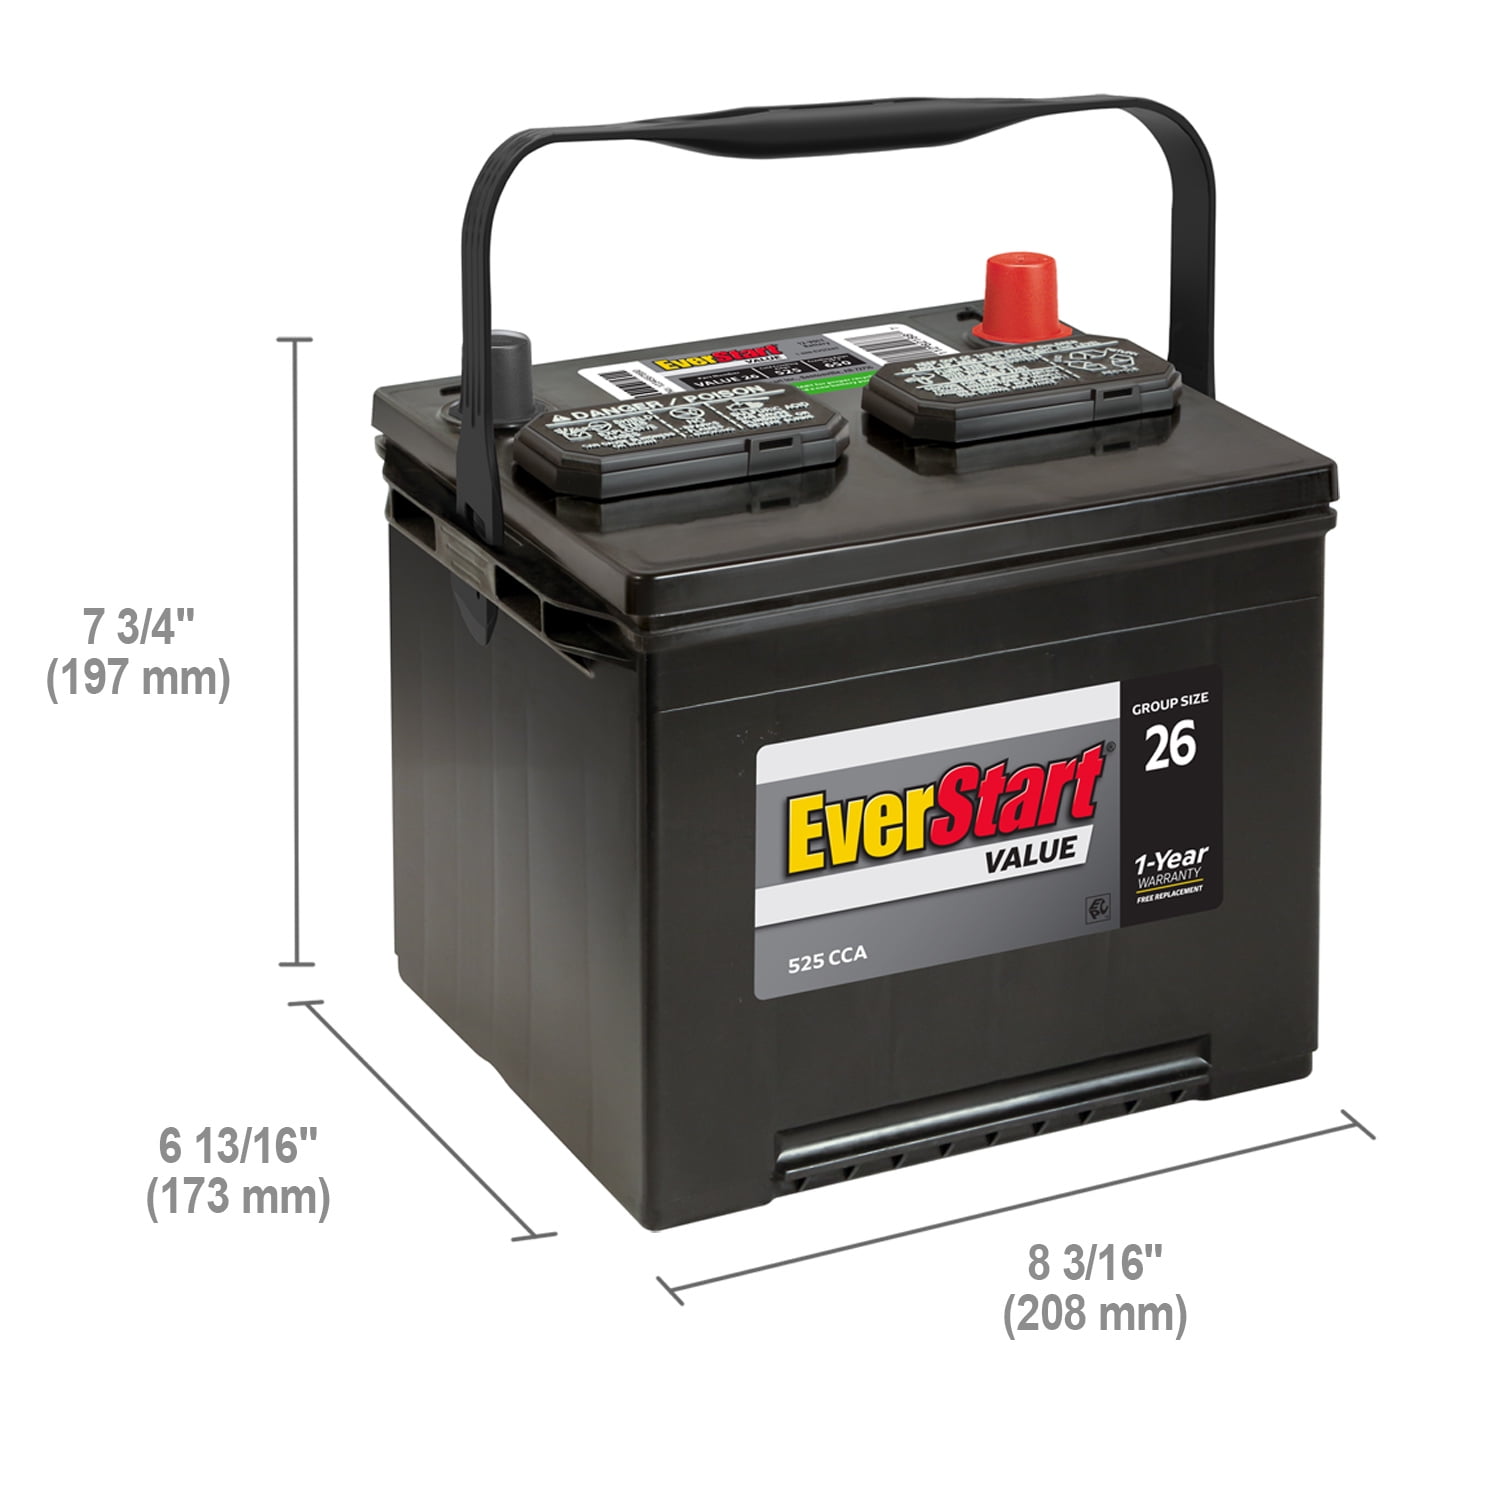 EverStart Value Lead Acid Automotive Battery, Group Size 26 12 Volt, 525  CCA 